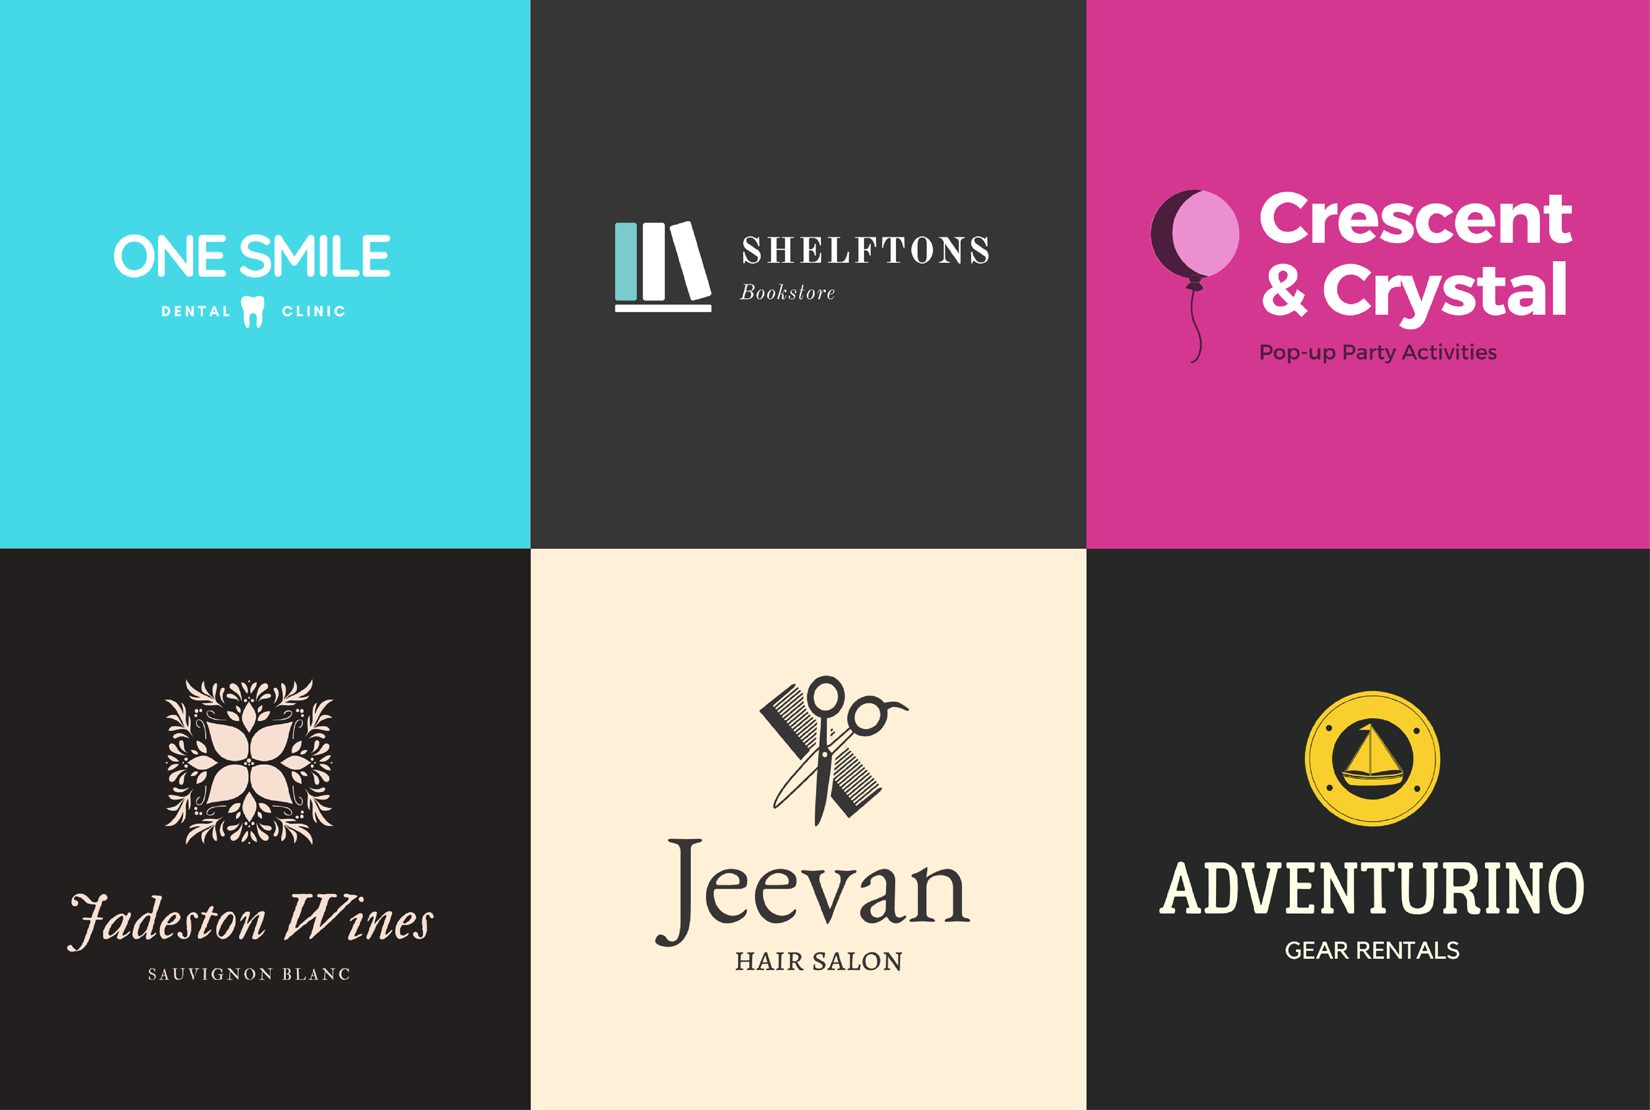 I will design 3 creative unique logos for your brand